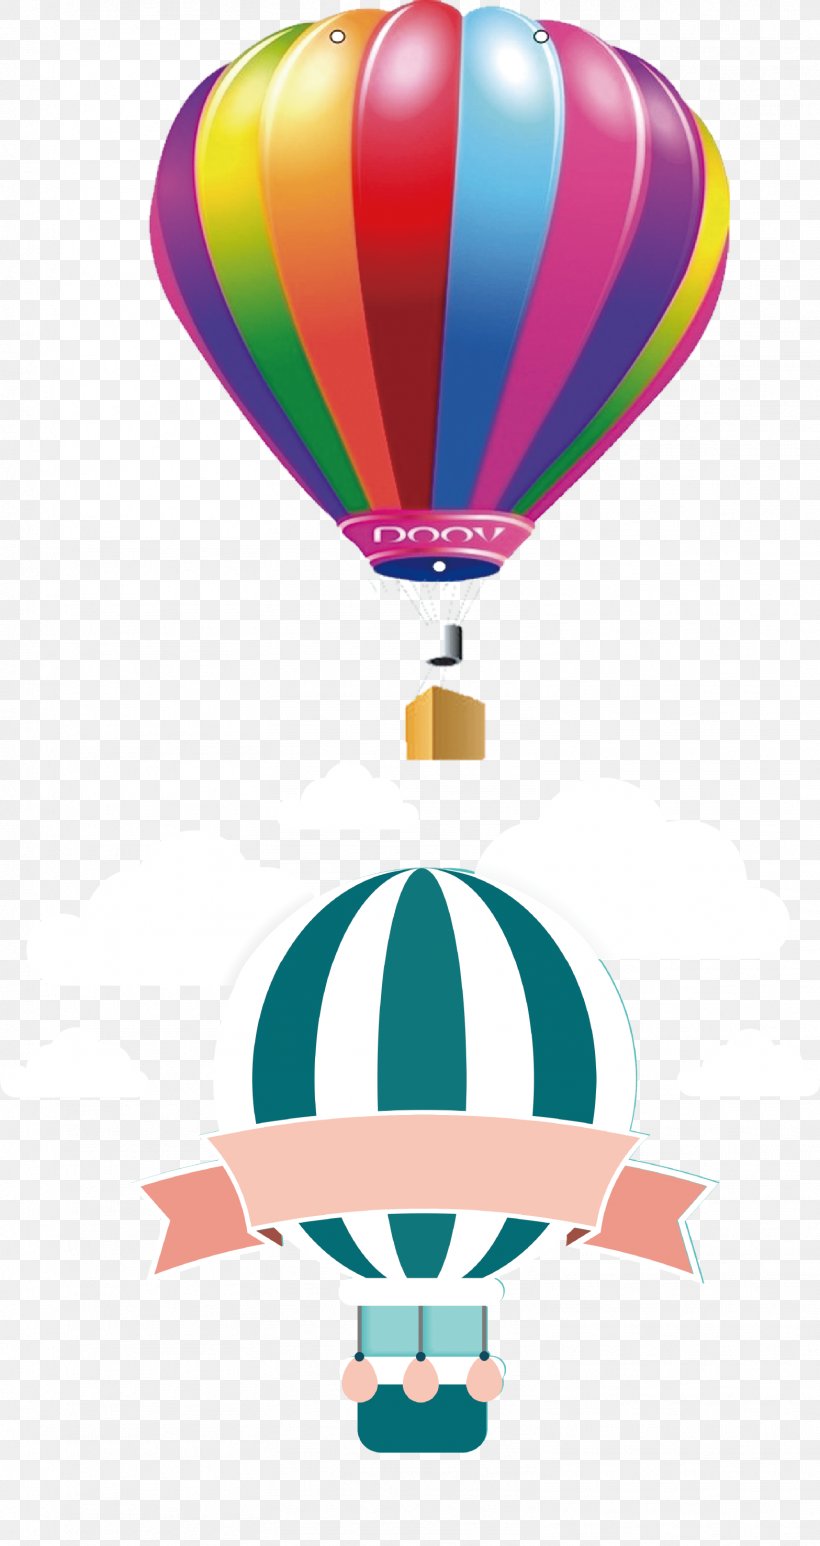 Images Of Cartoon Hot Air Balloon Basket Png